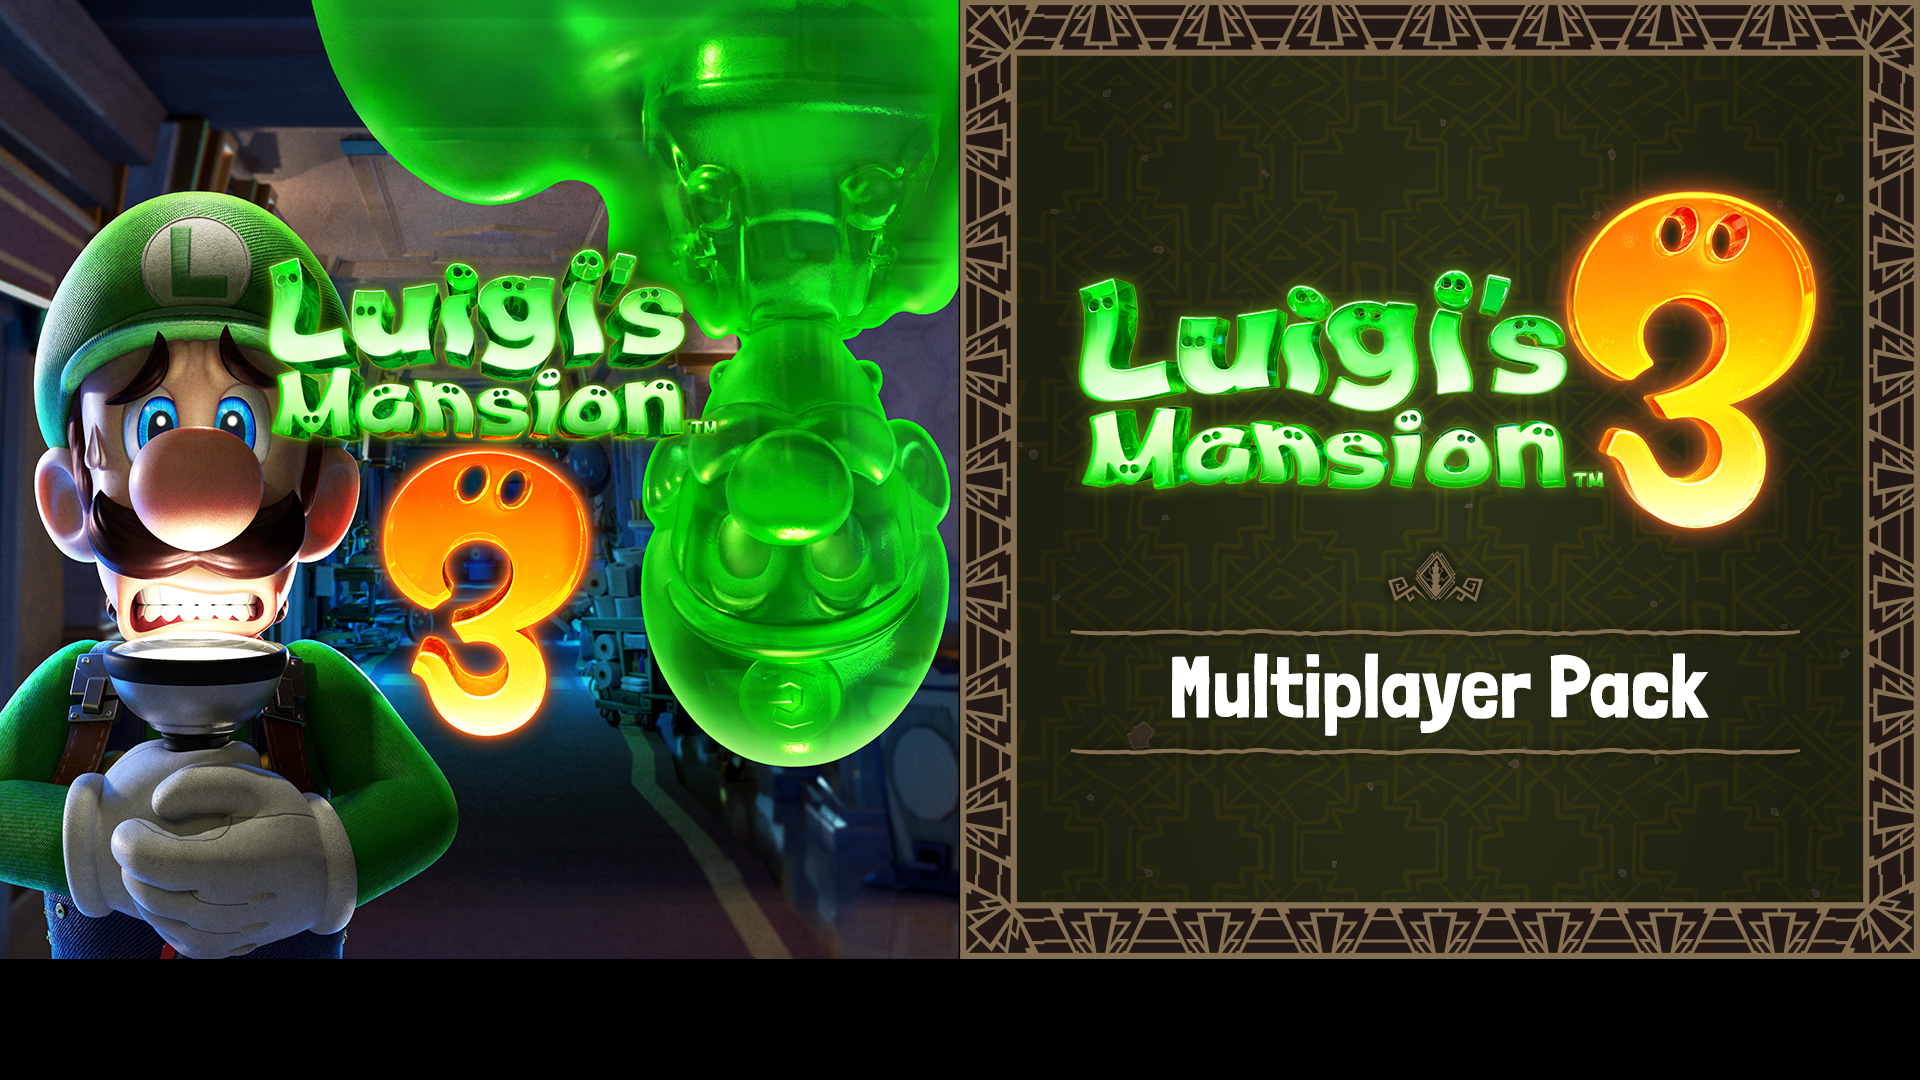 Luigi's Mansion 3 (Nintendo Switch Digital Code) w/ Multiplayer Pack DLC $49.50